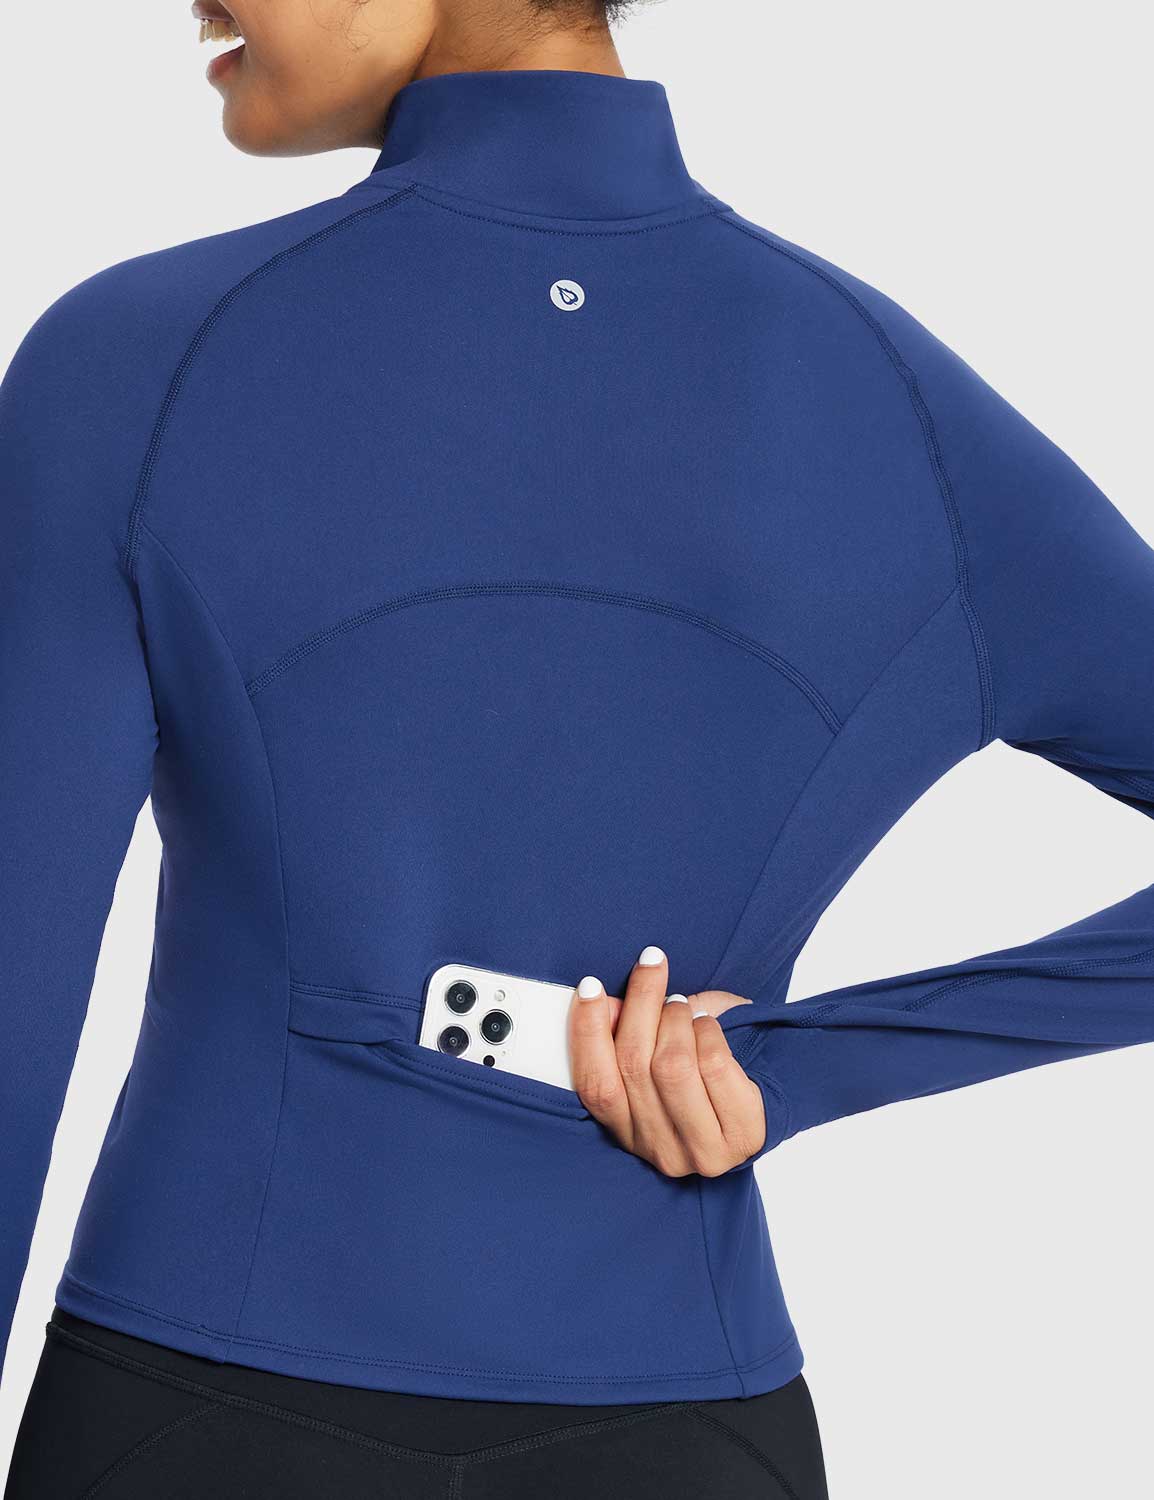 Baleaf Women's Half Zip Pullover Stand Collar Sweatshirt Estate Blue with Reverse Back Pocket